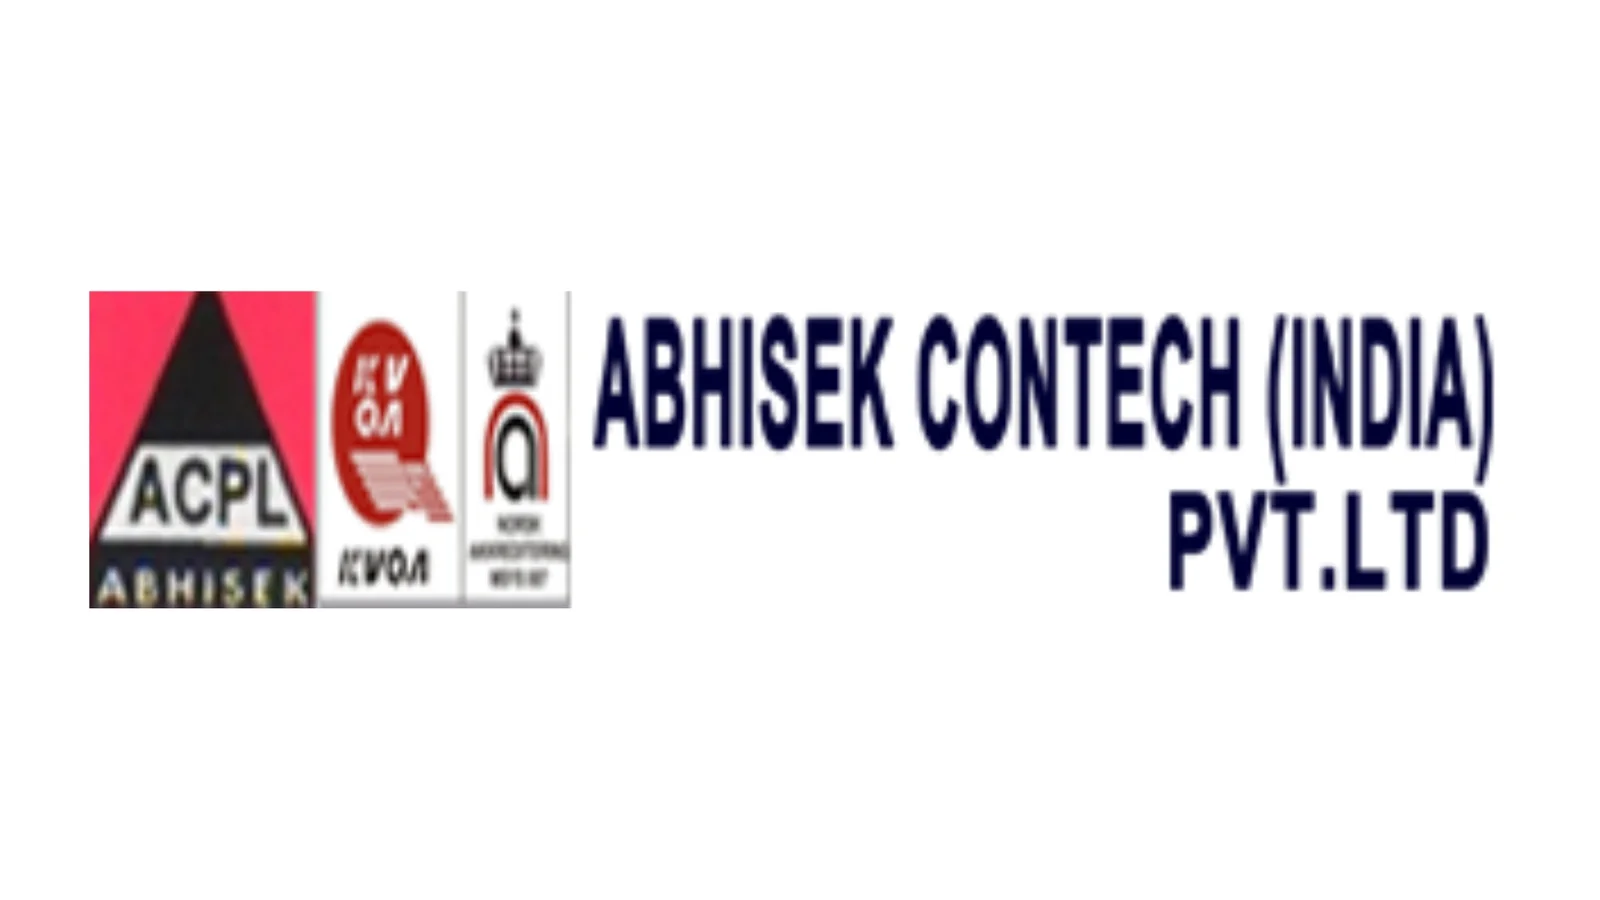 abhisek contech